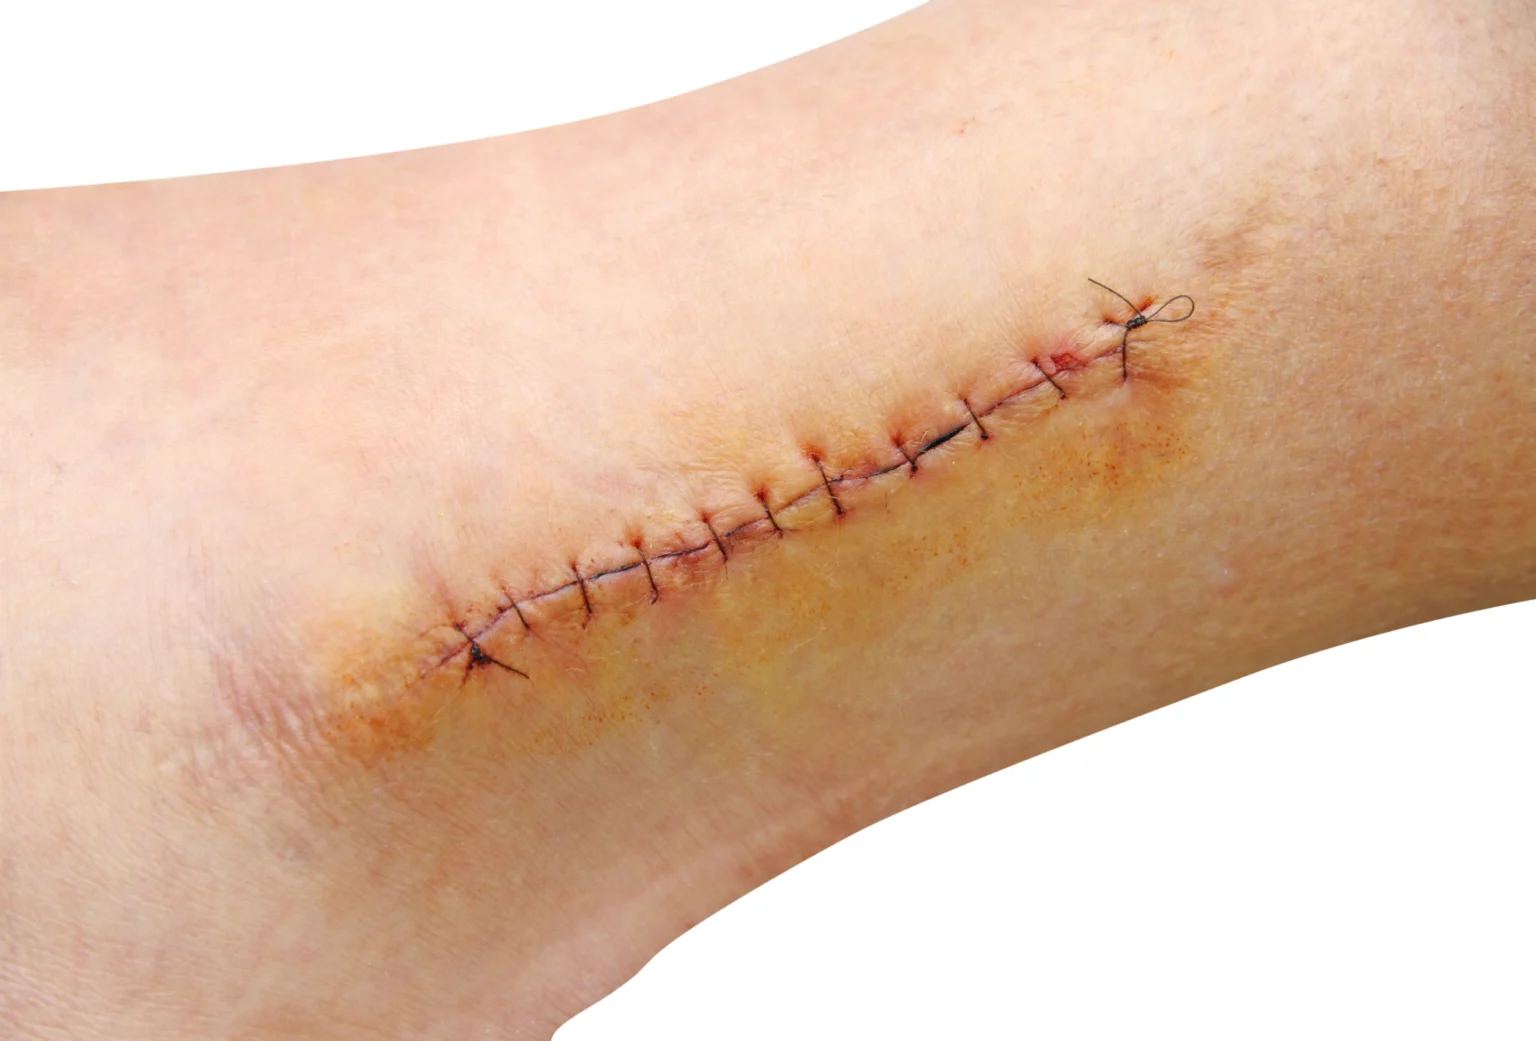 Infected Stitches: Symptoms, Pictures, Risk Factors, Treatment